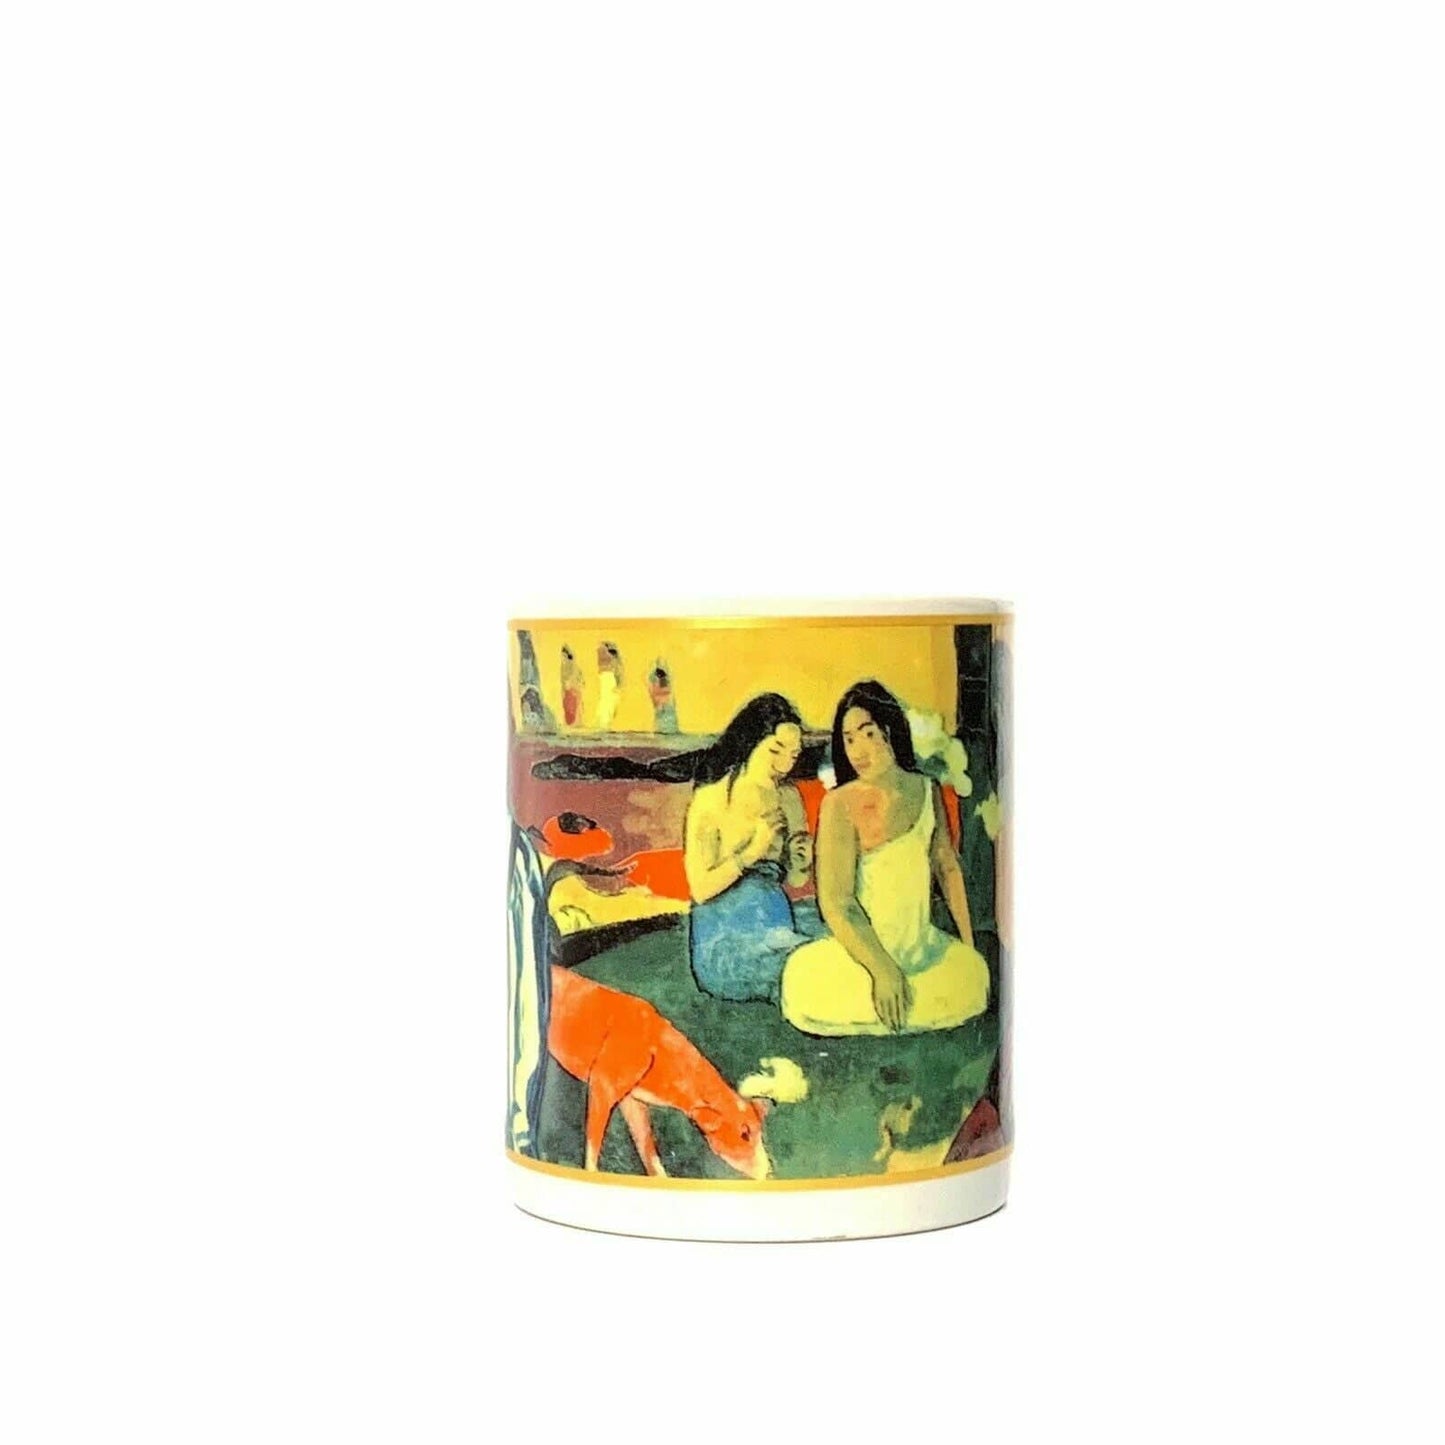 CAFE ARTS B. Wild design on Coffee Mug for artist GAUGHIN'S Artwork